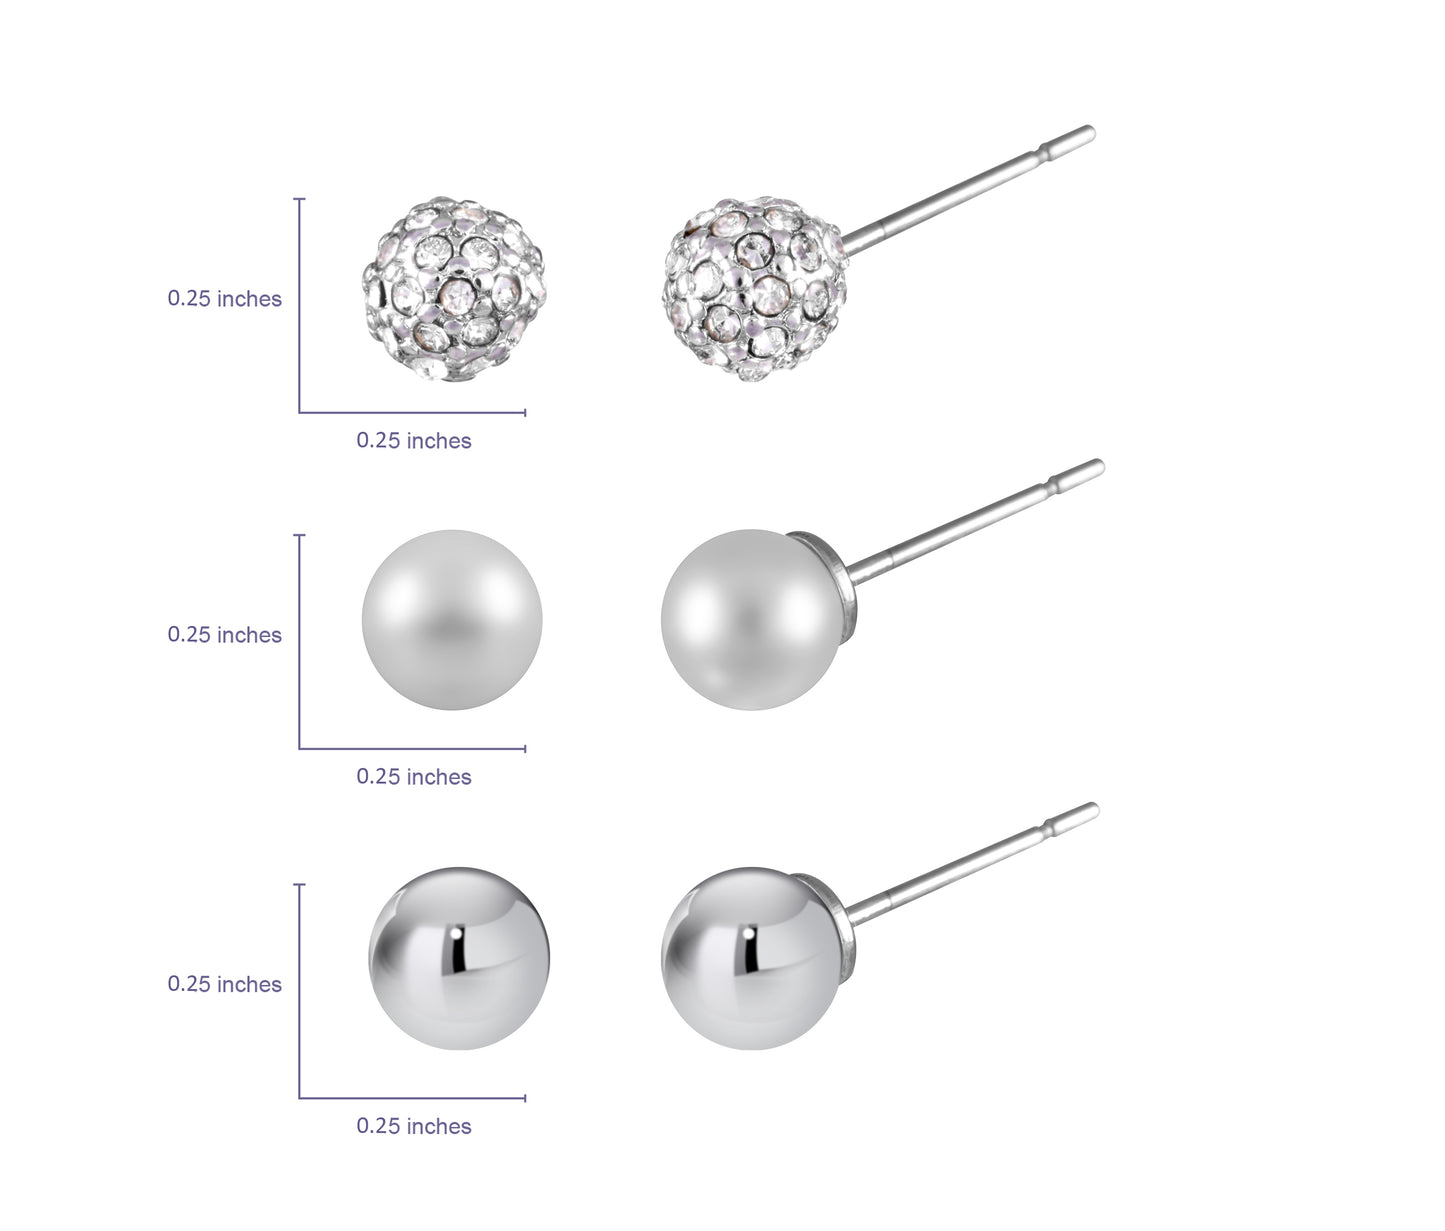 Silver Ball Stud Set Earrings